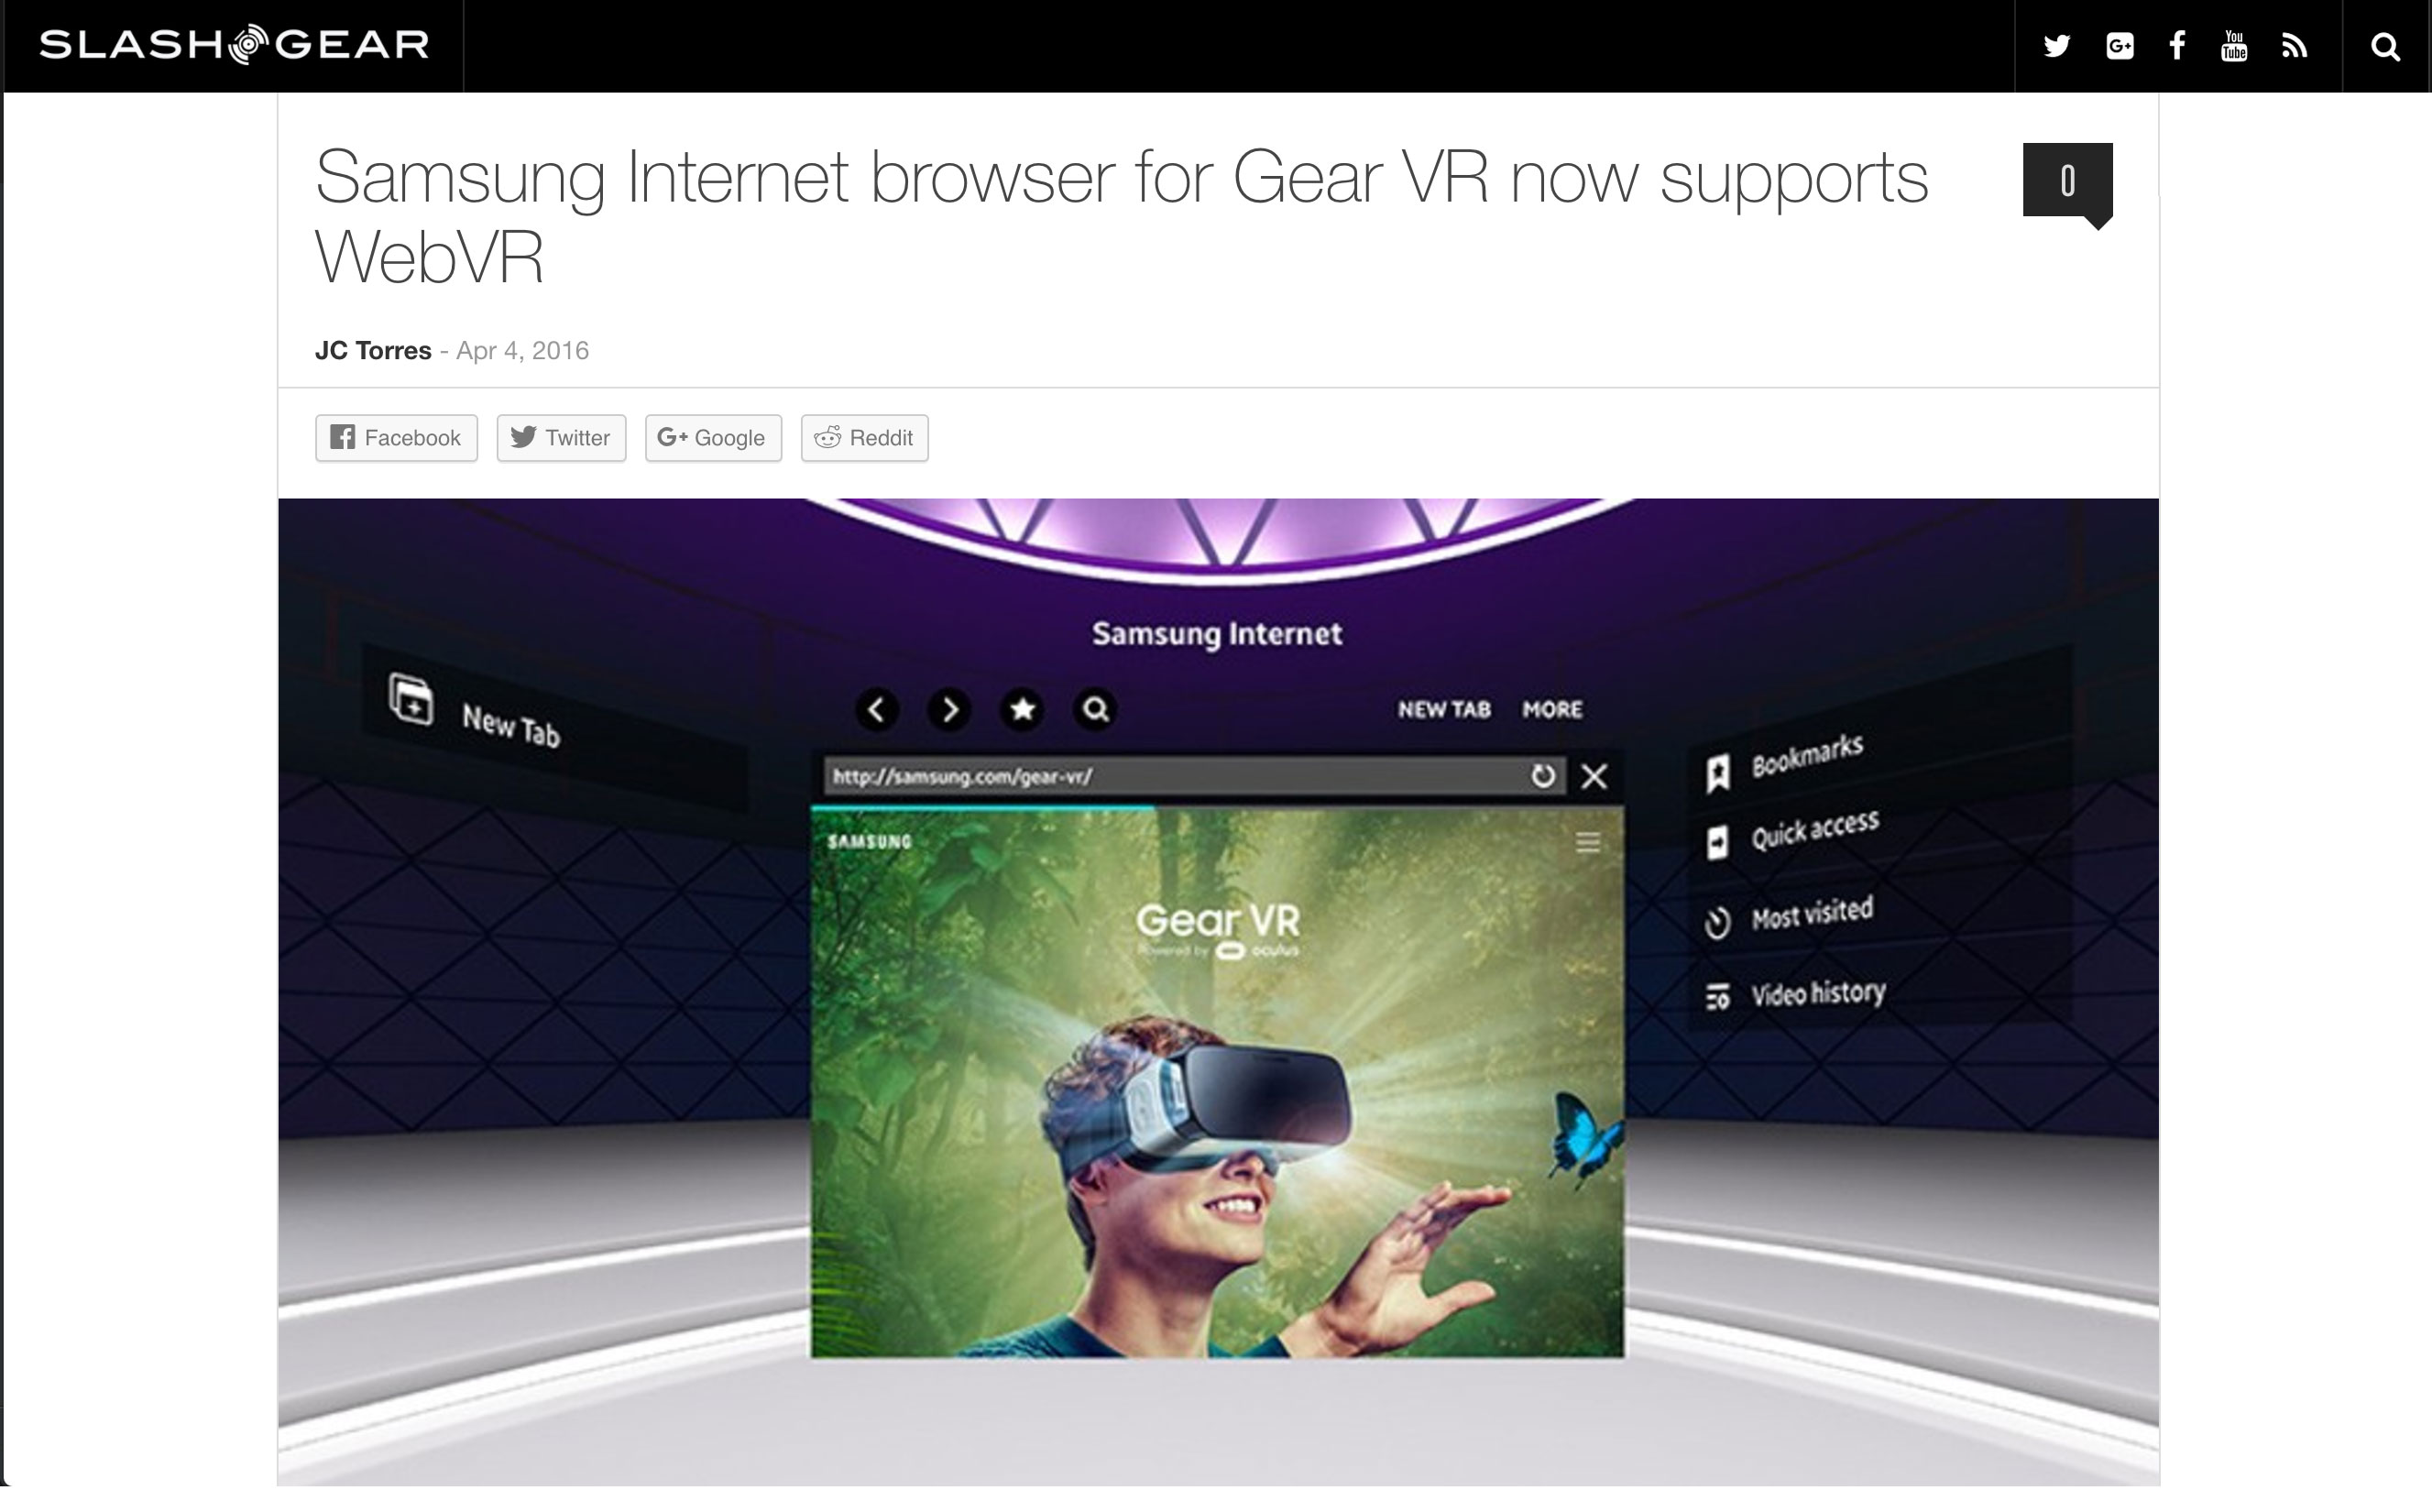 Samsung Internet for Gear VR WebVR support